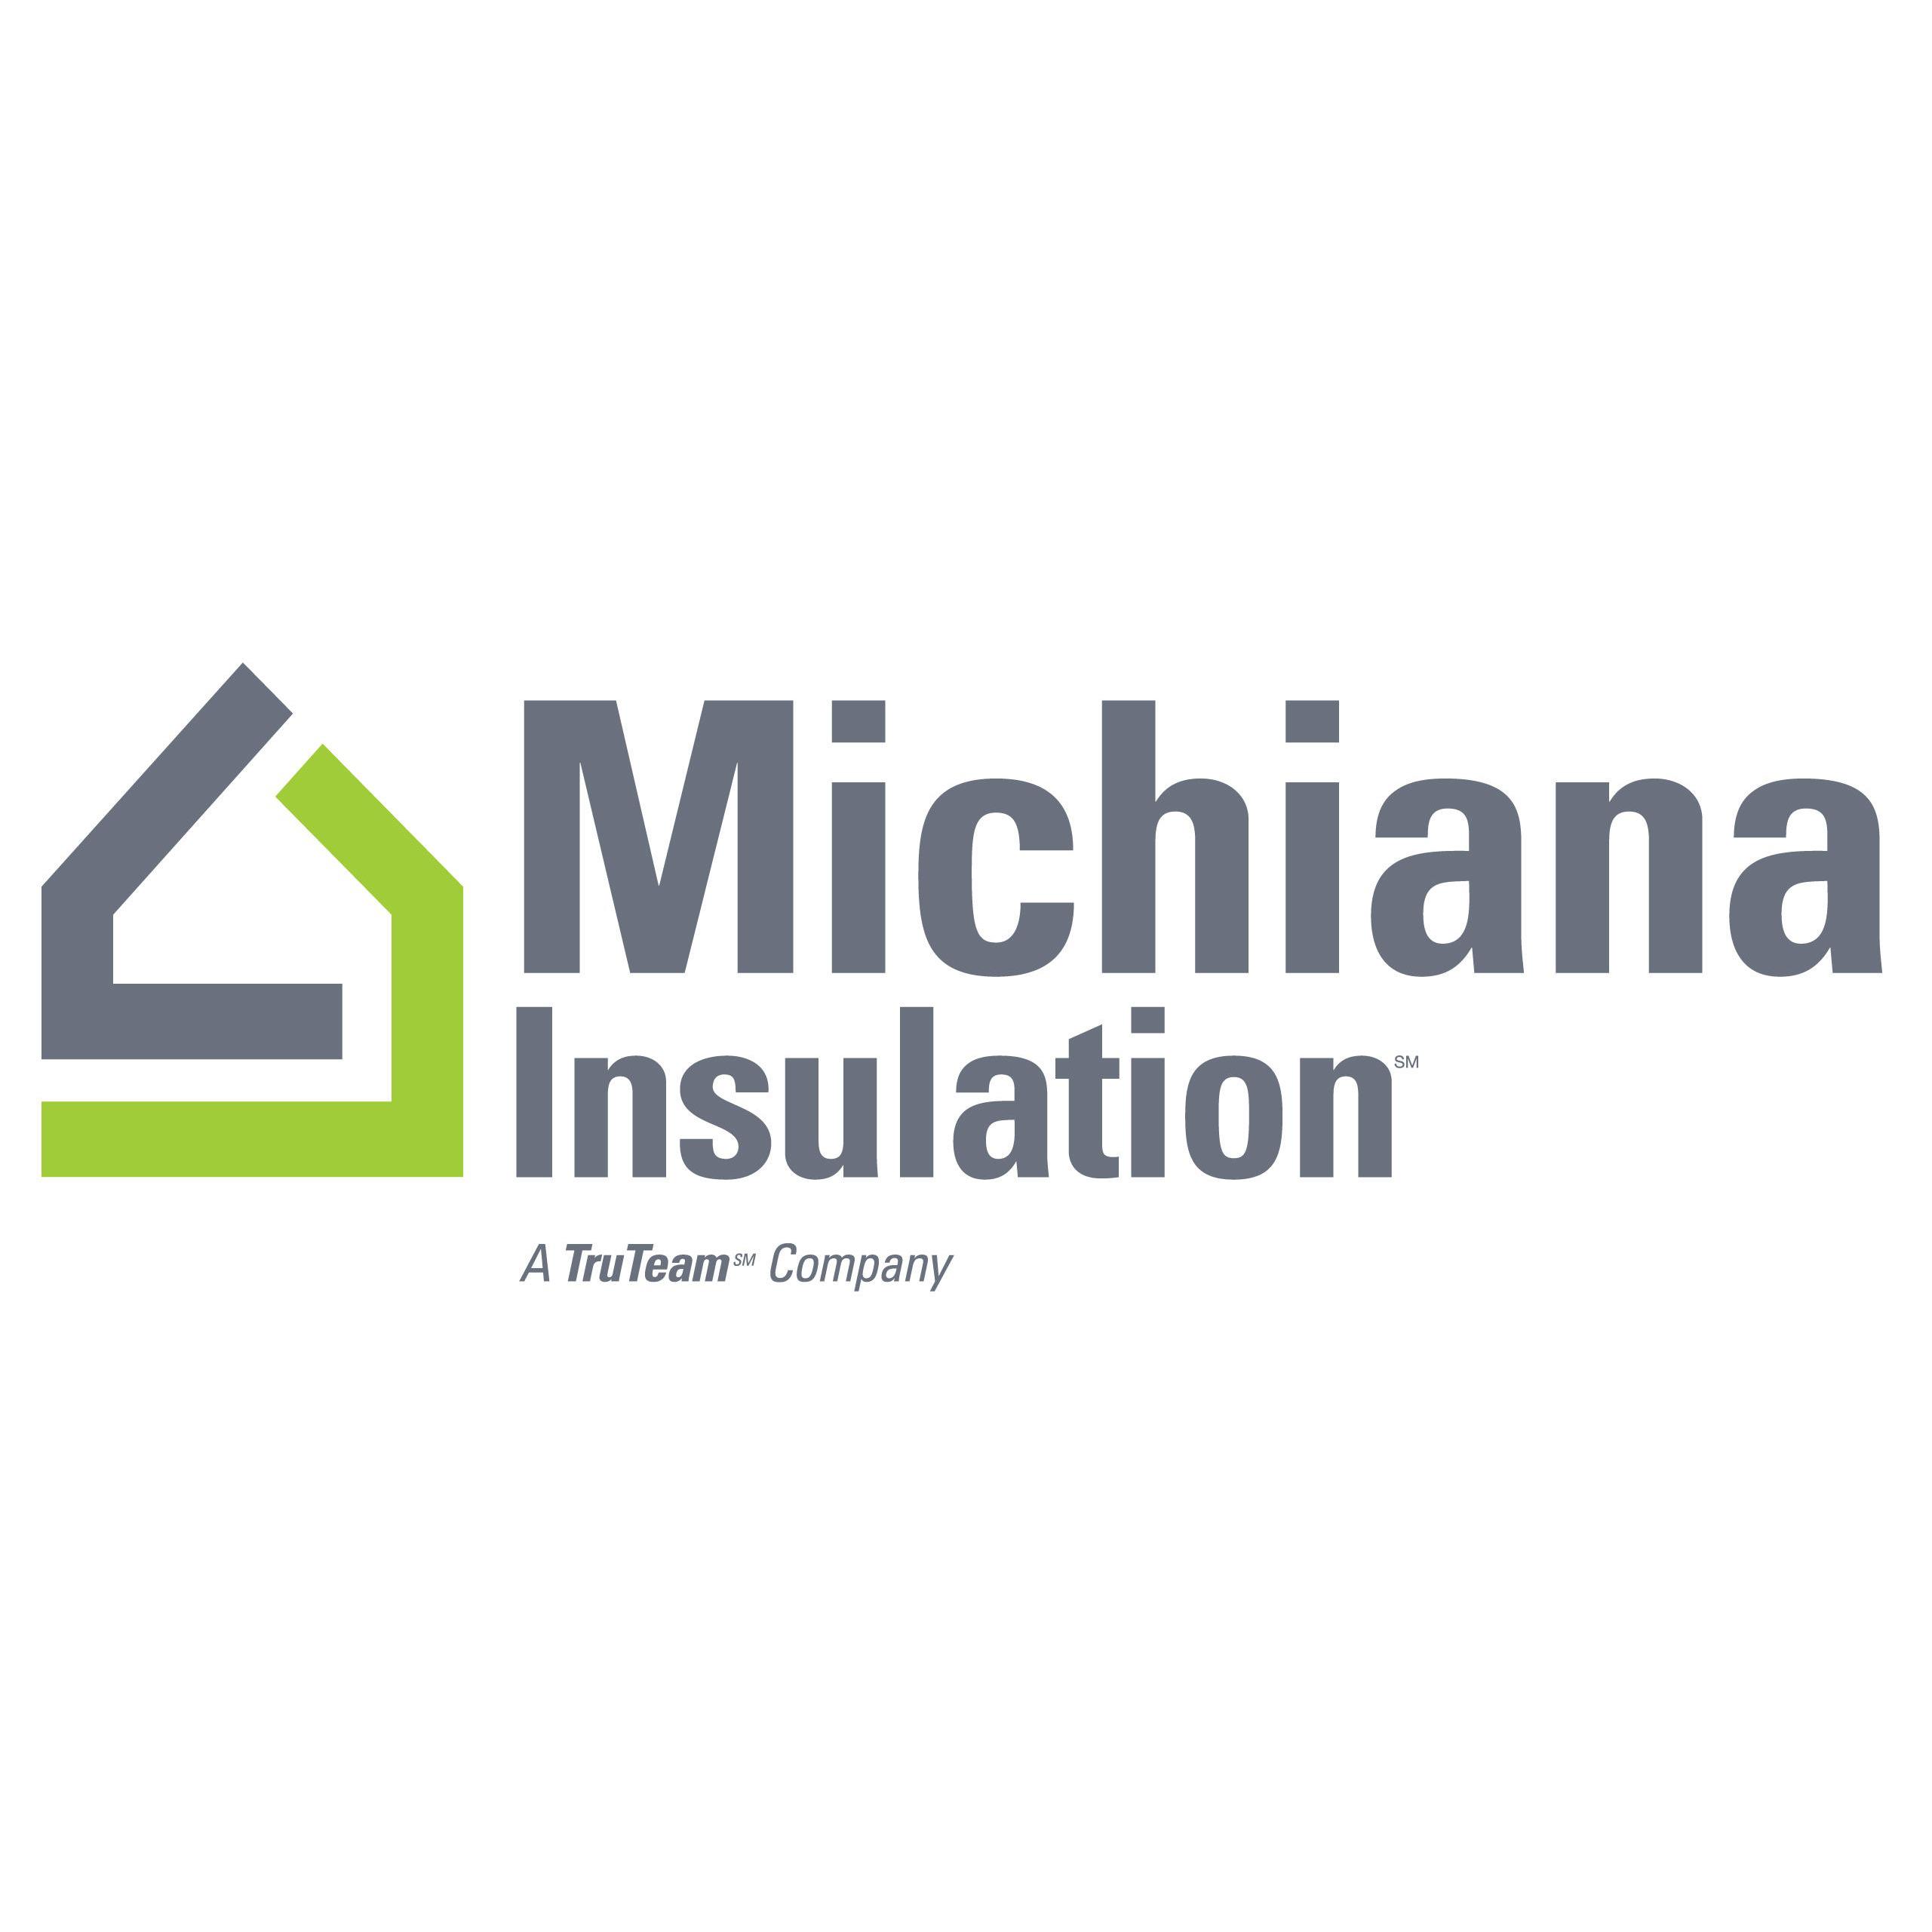 Michiana Insulation